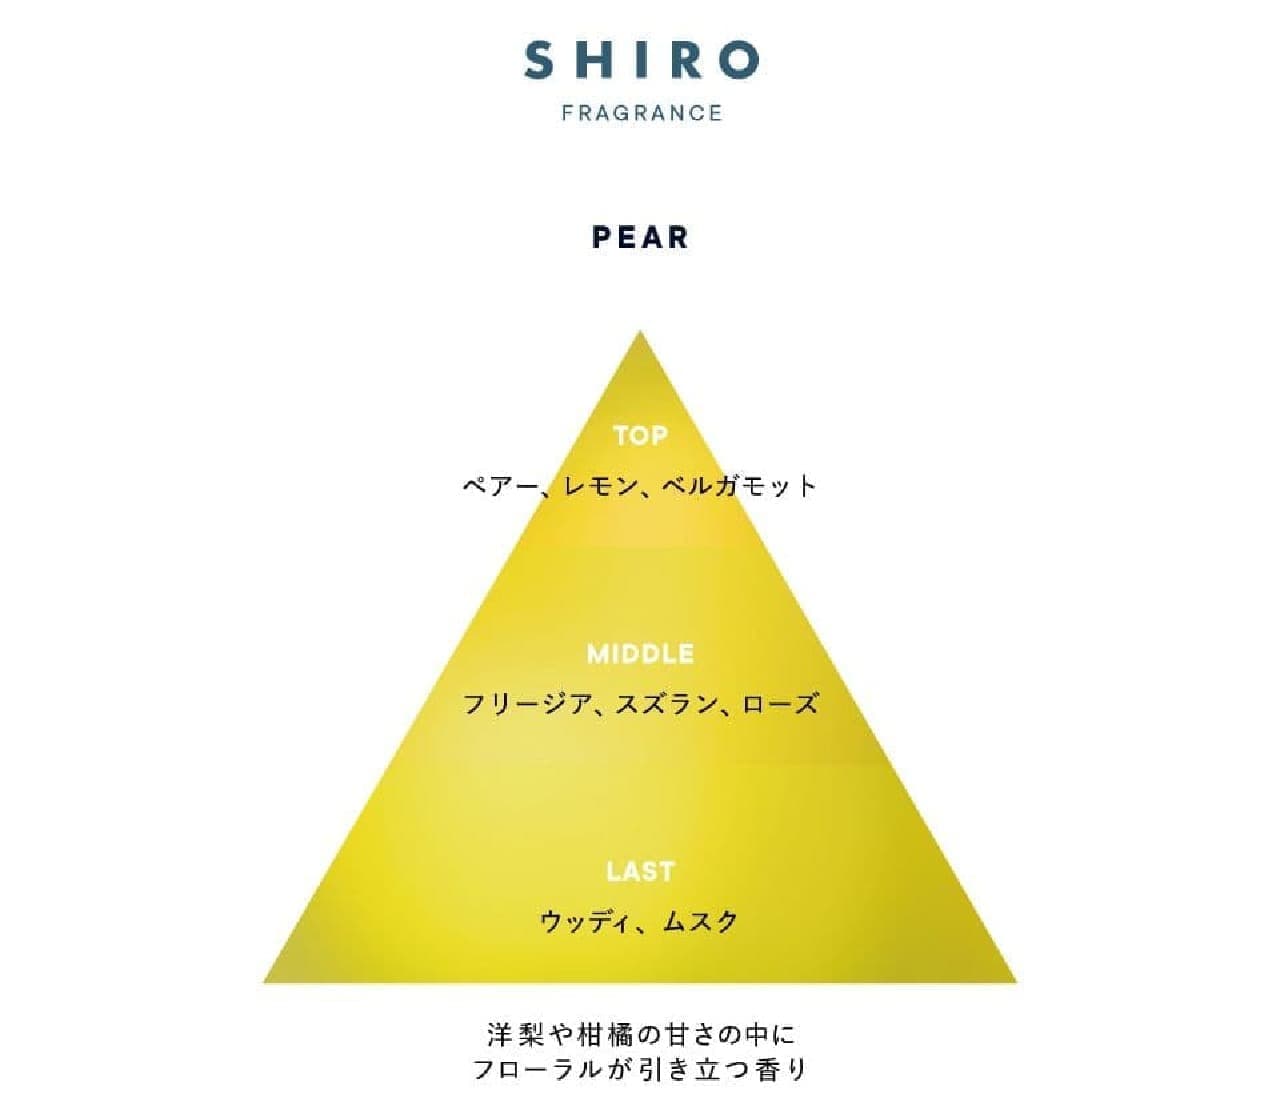 SHIRO 限定フレグランス“ペアー”シリーズ